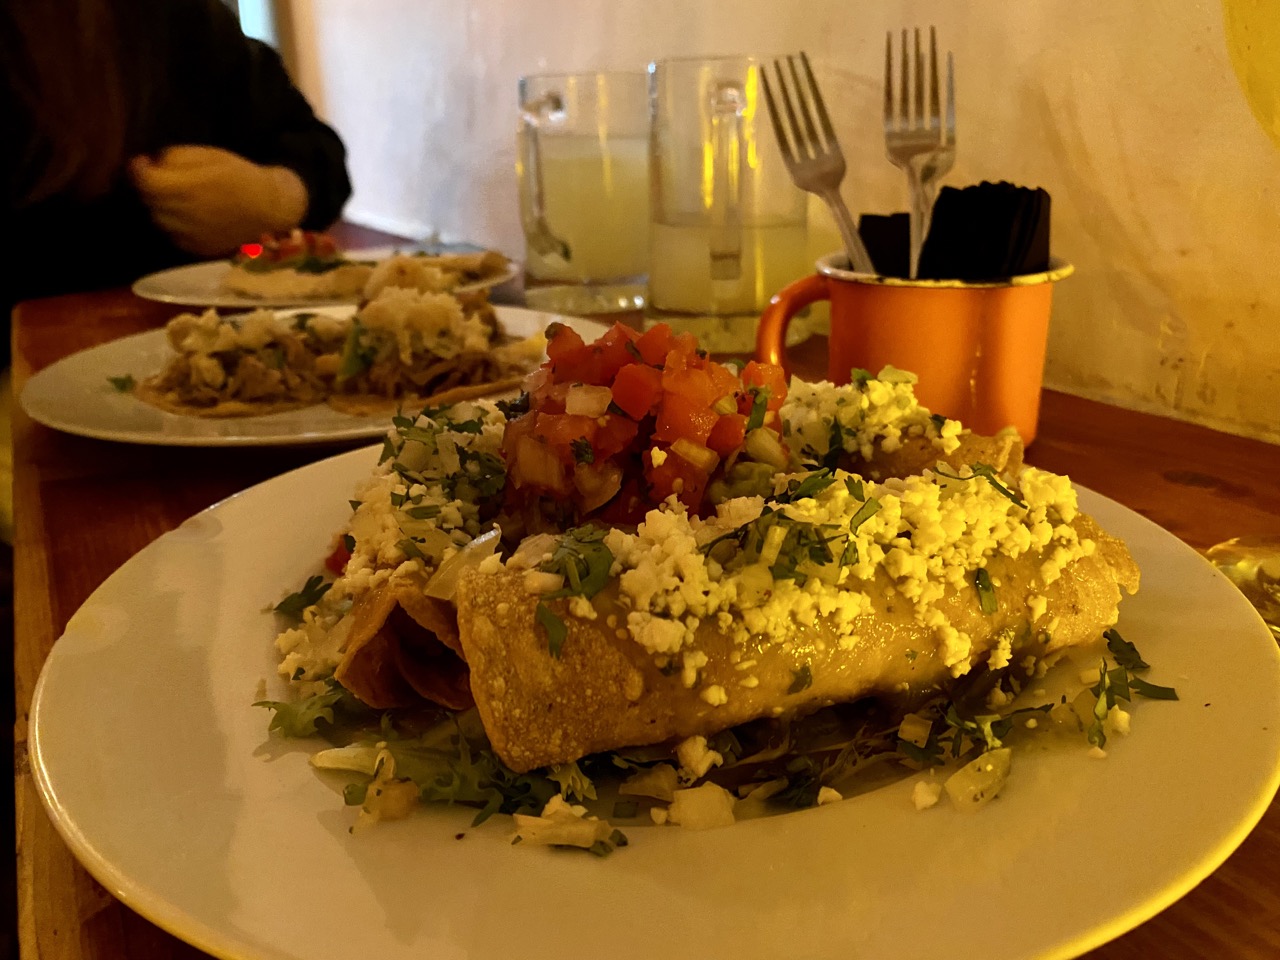 La Pachuca - the original Mexican restaurant